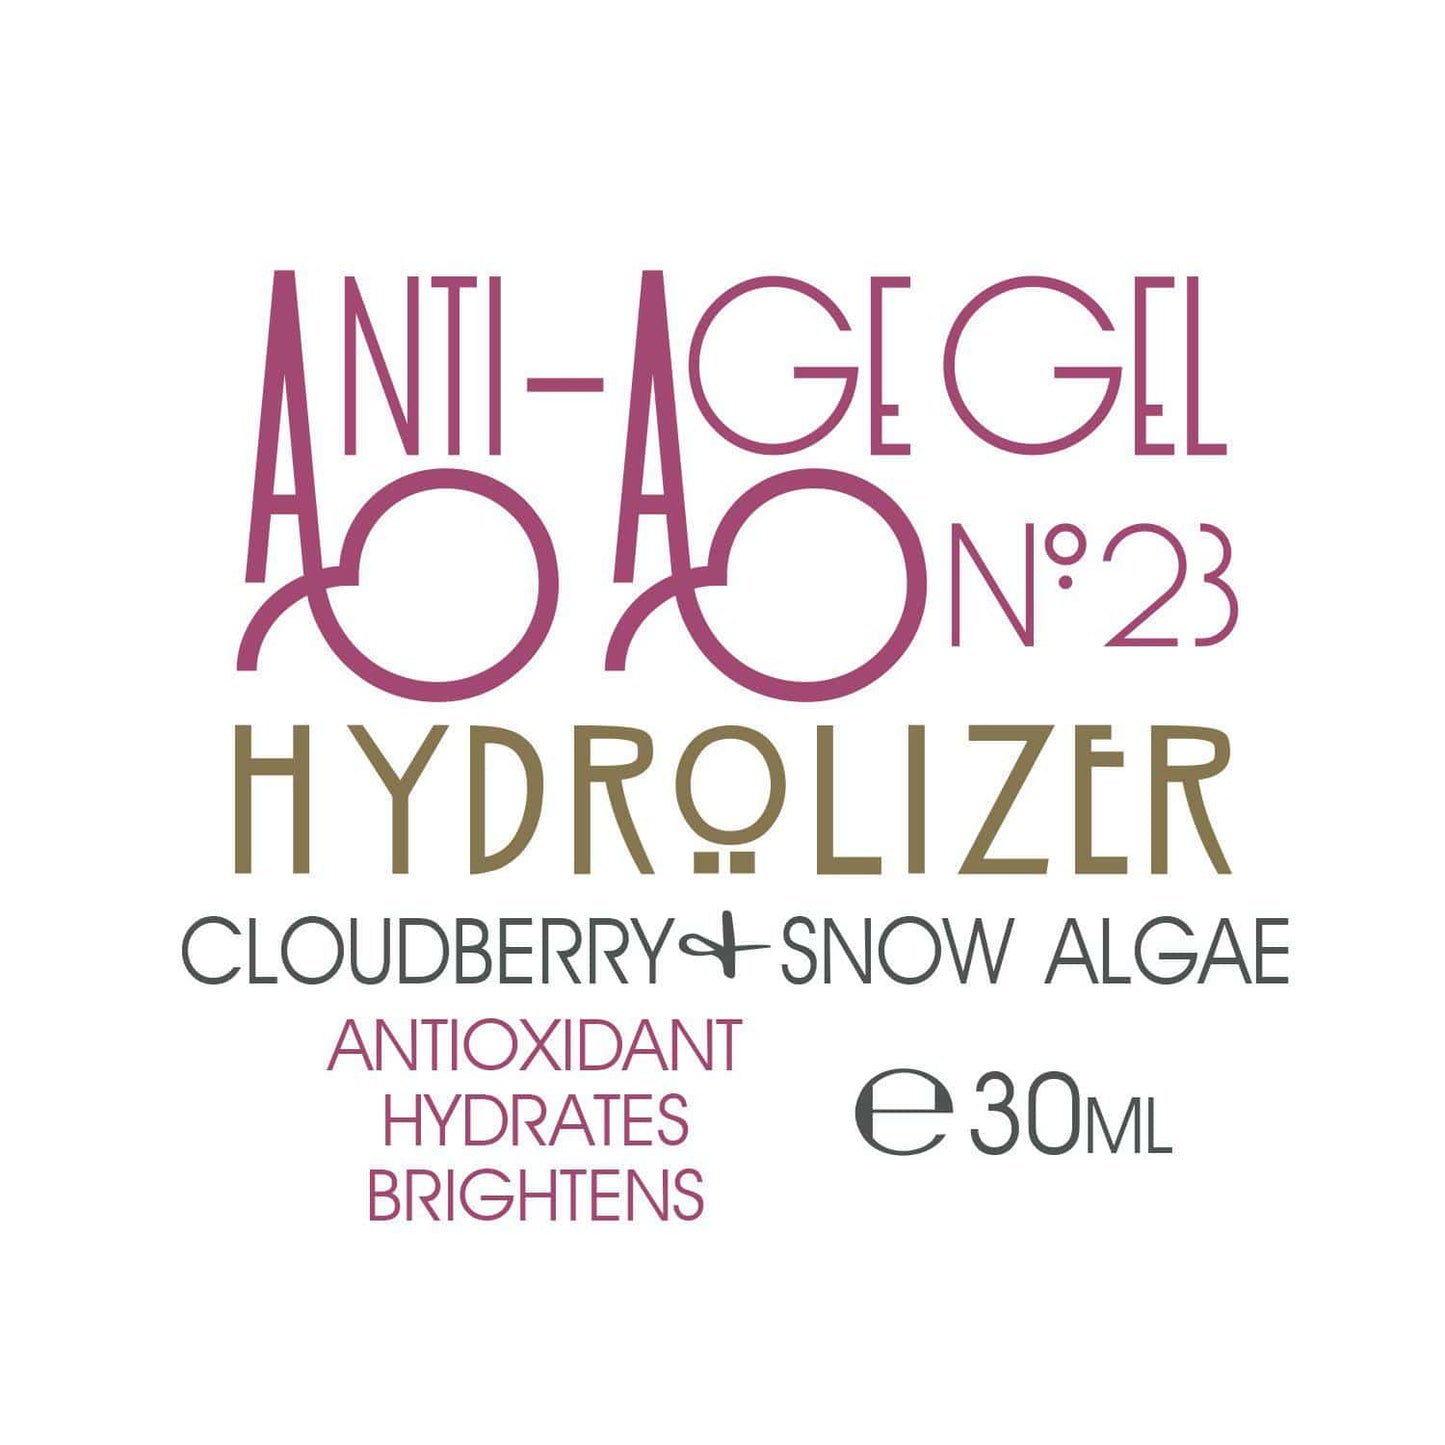 Anti-Age Gel Hydrolizer - No.23 - With Cloudberry and Snow Algae